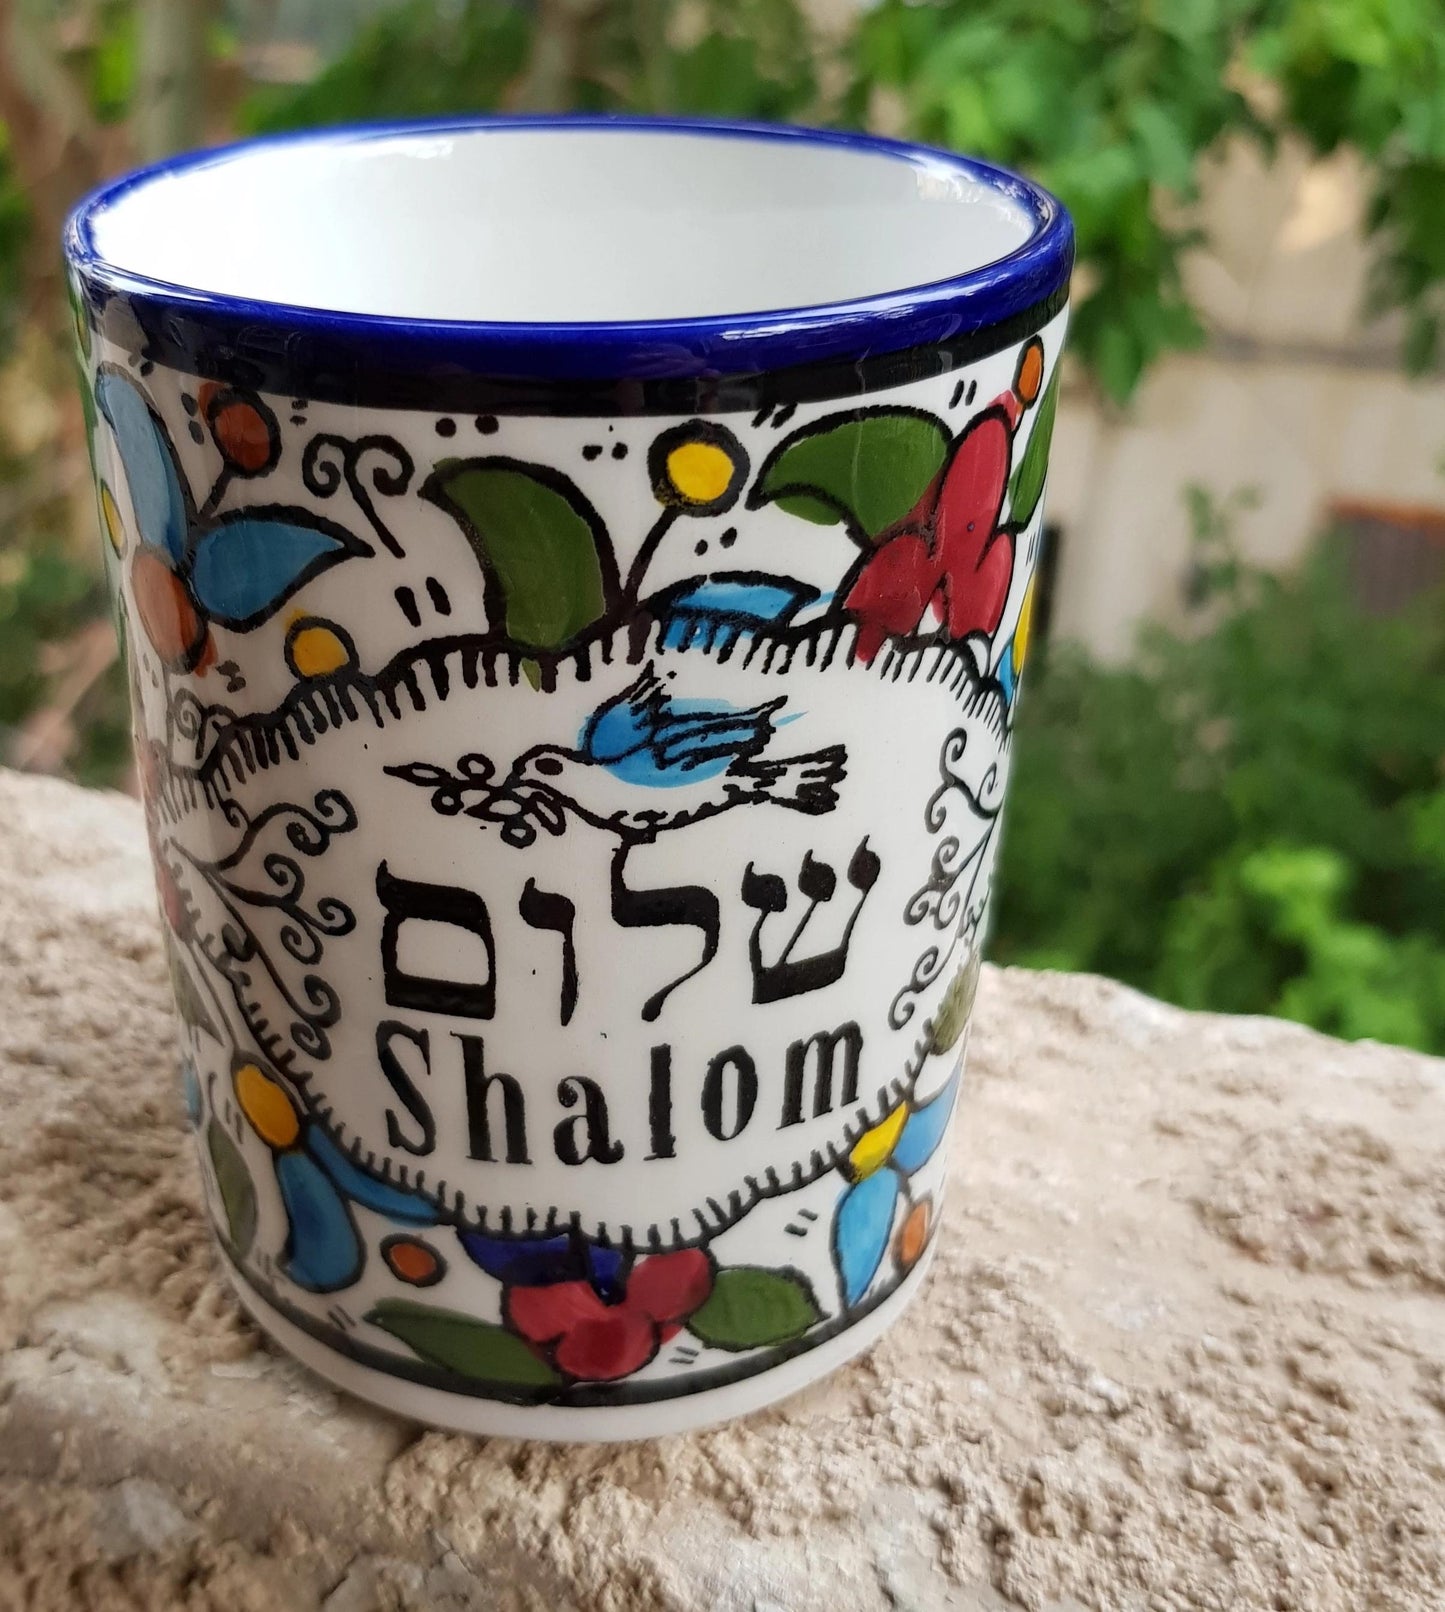 Bluenoemi Jewelry Mug Shalom Bluenoemi Armenian Mug Ceramic Coffee Mug Tel Aviv Israeli Gifts. Mug with an handcrafted Armenian Design Shalom motif .